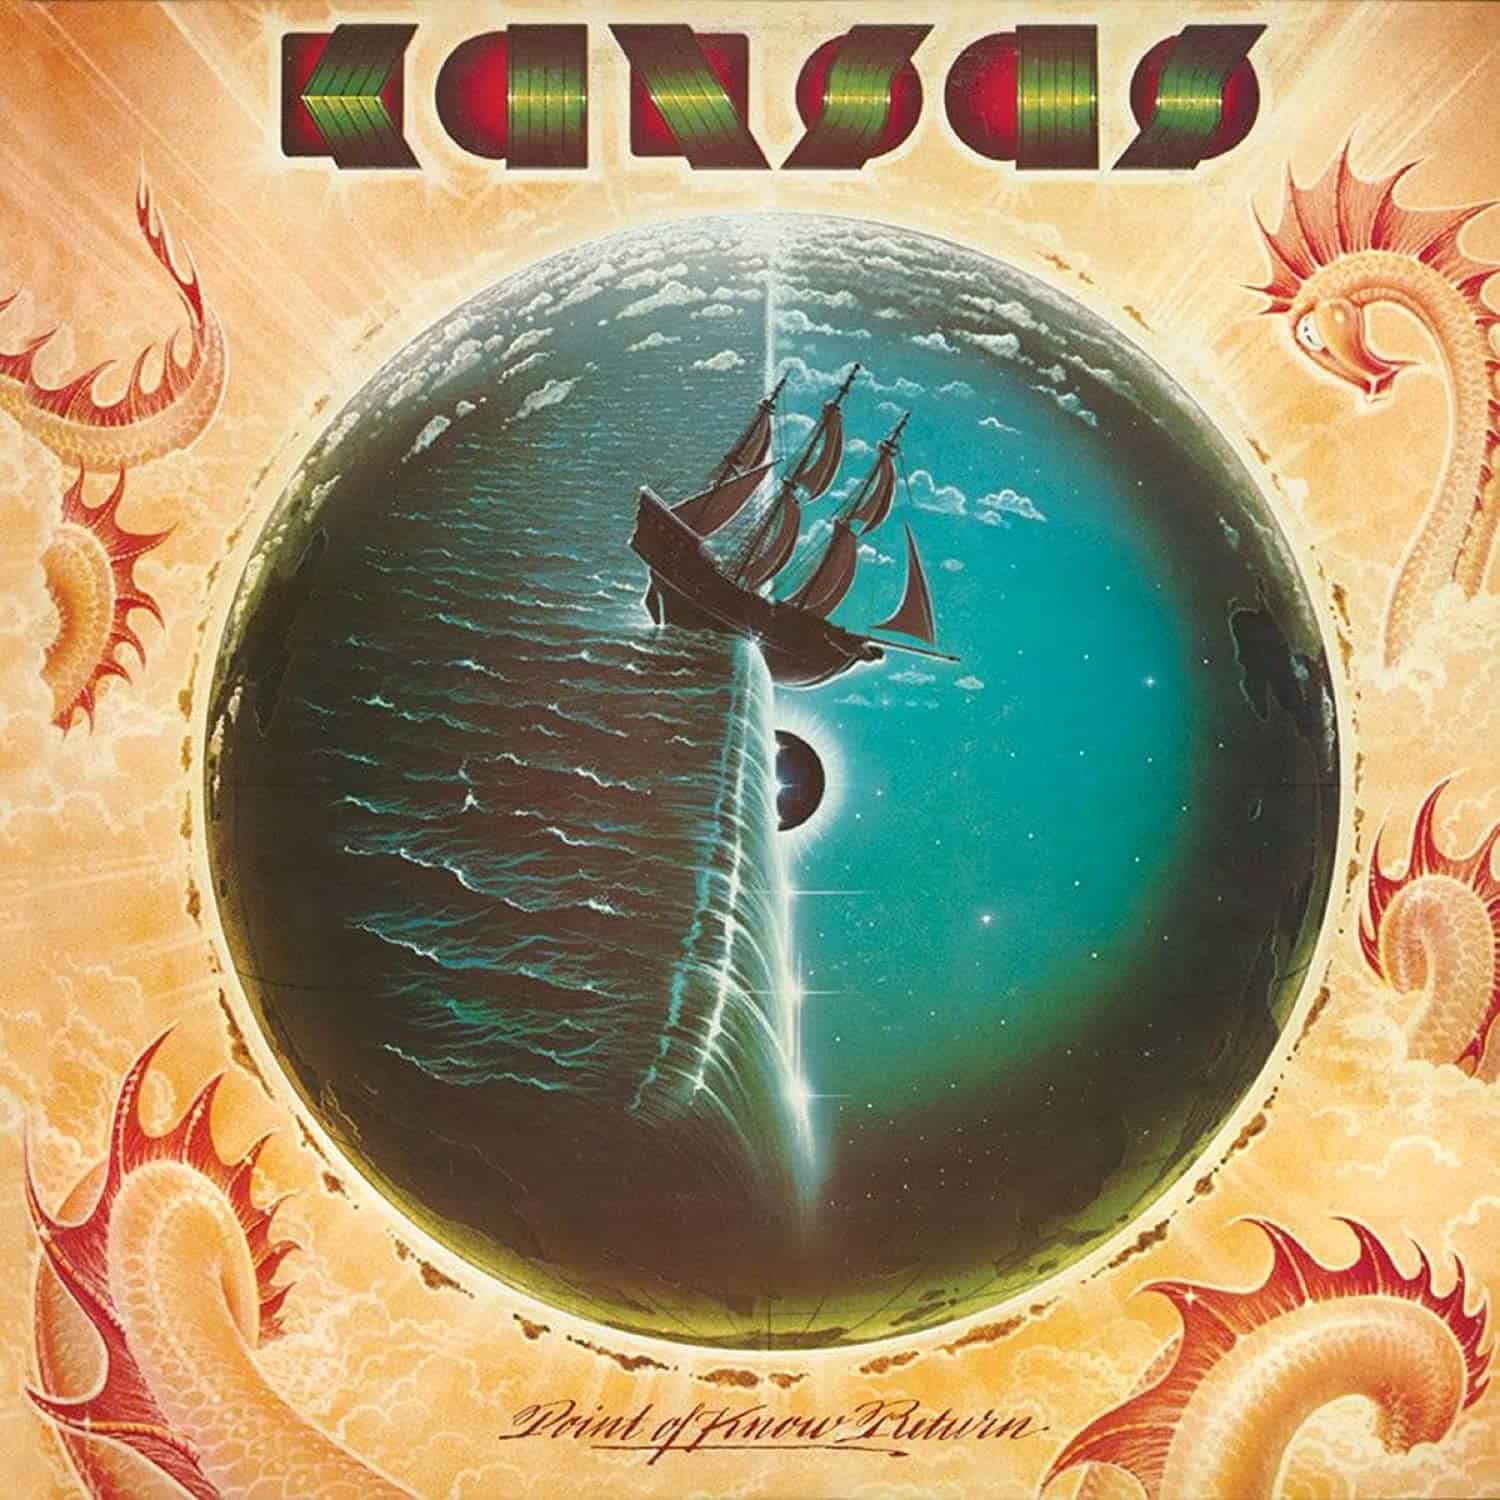 Kansas-Point-of-Know-Return-vinyl-LP-record-album-front